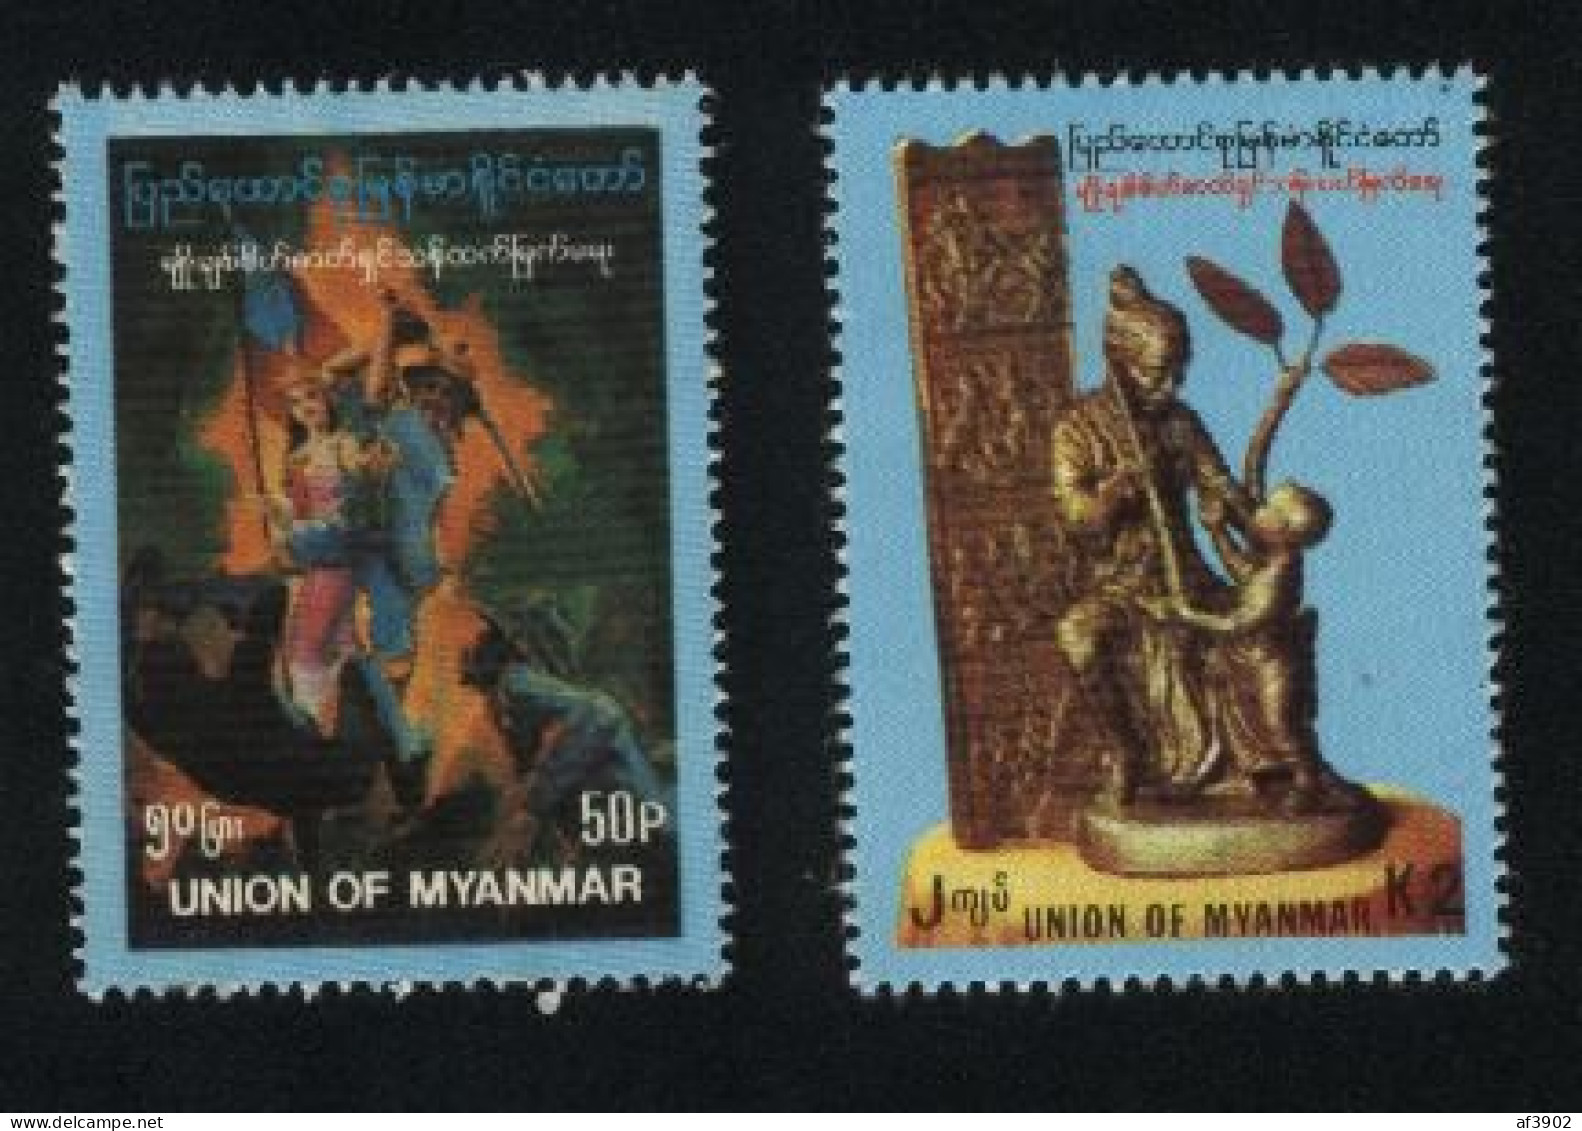 BURMA/MYANMAR STAMP 1993 ISSUED STATUE SET, MNH - Myanmar (Burma 1948-...)